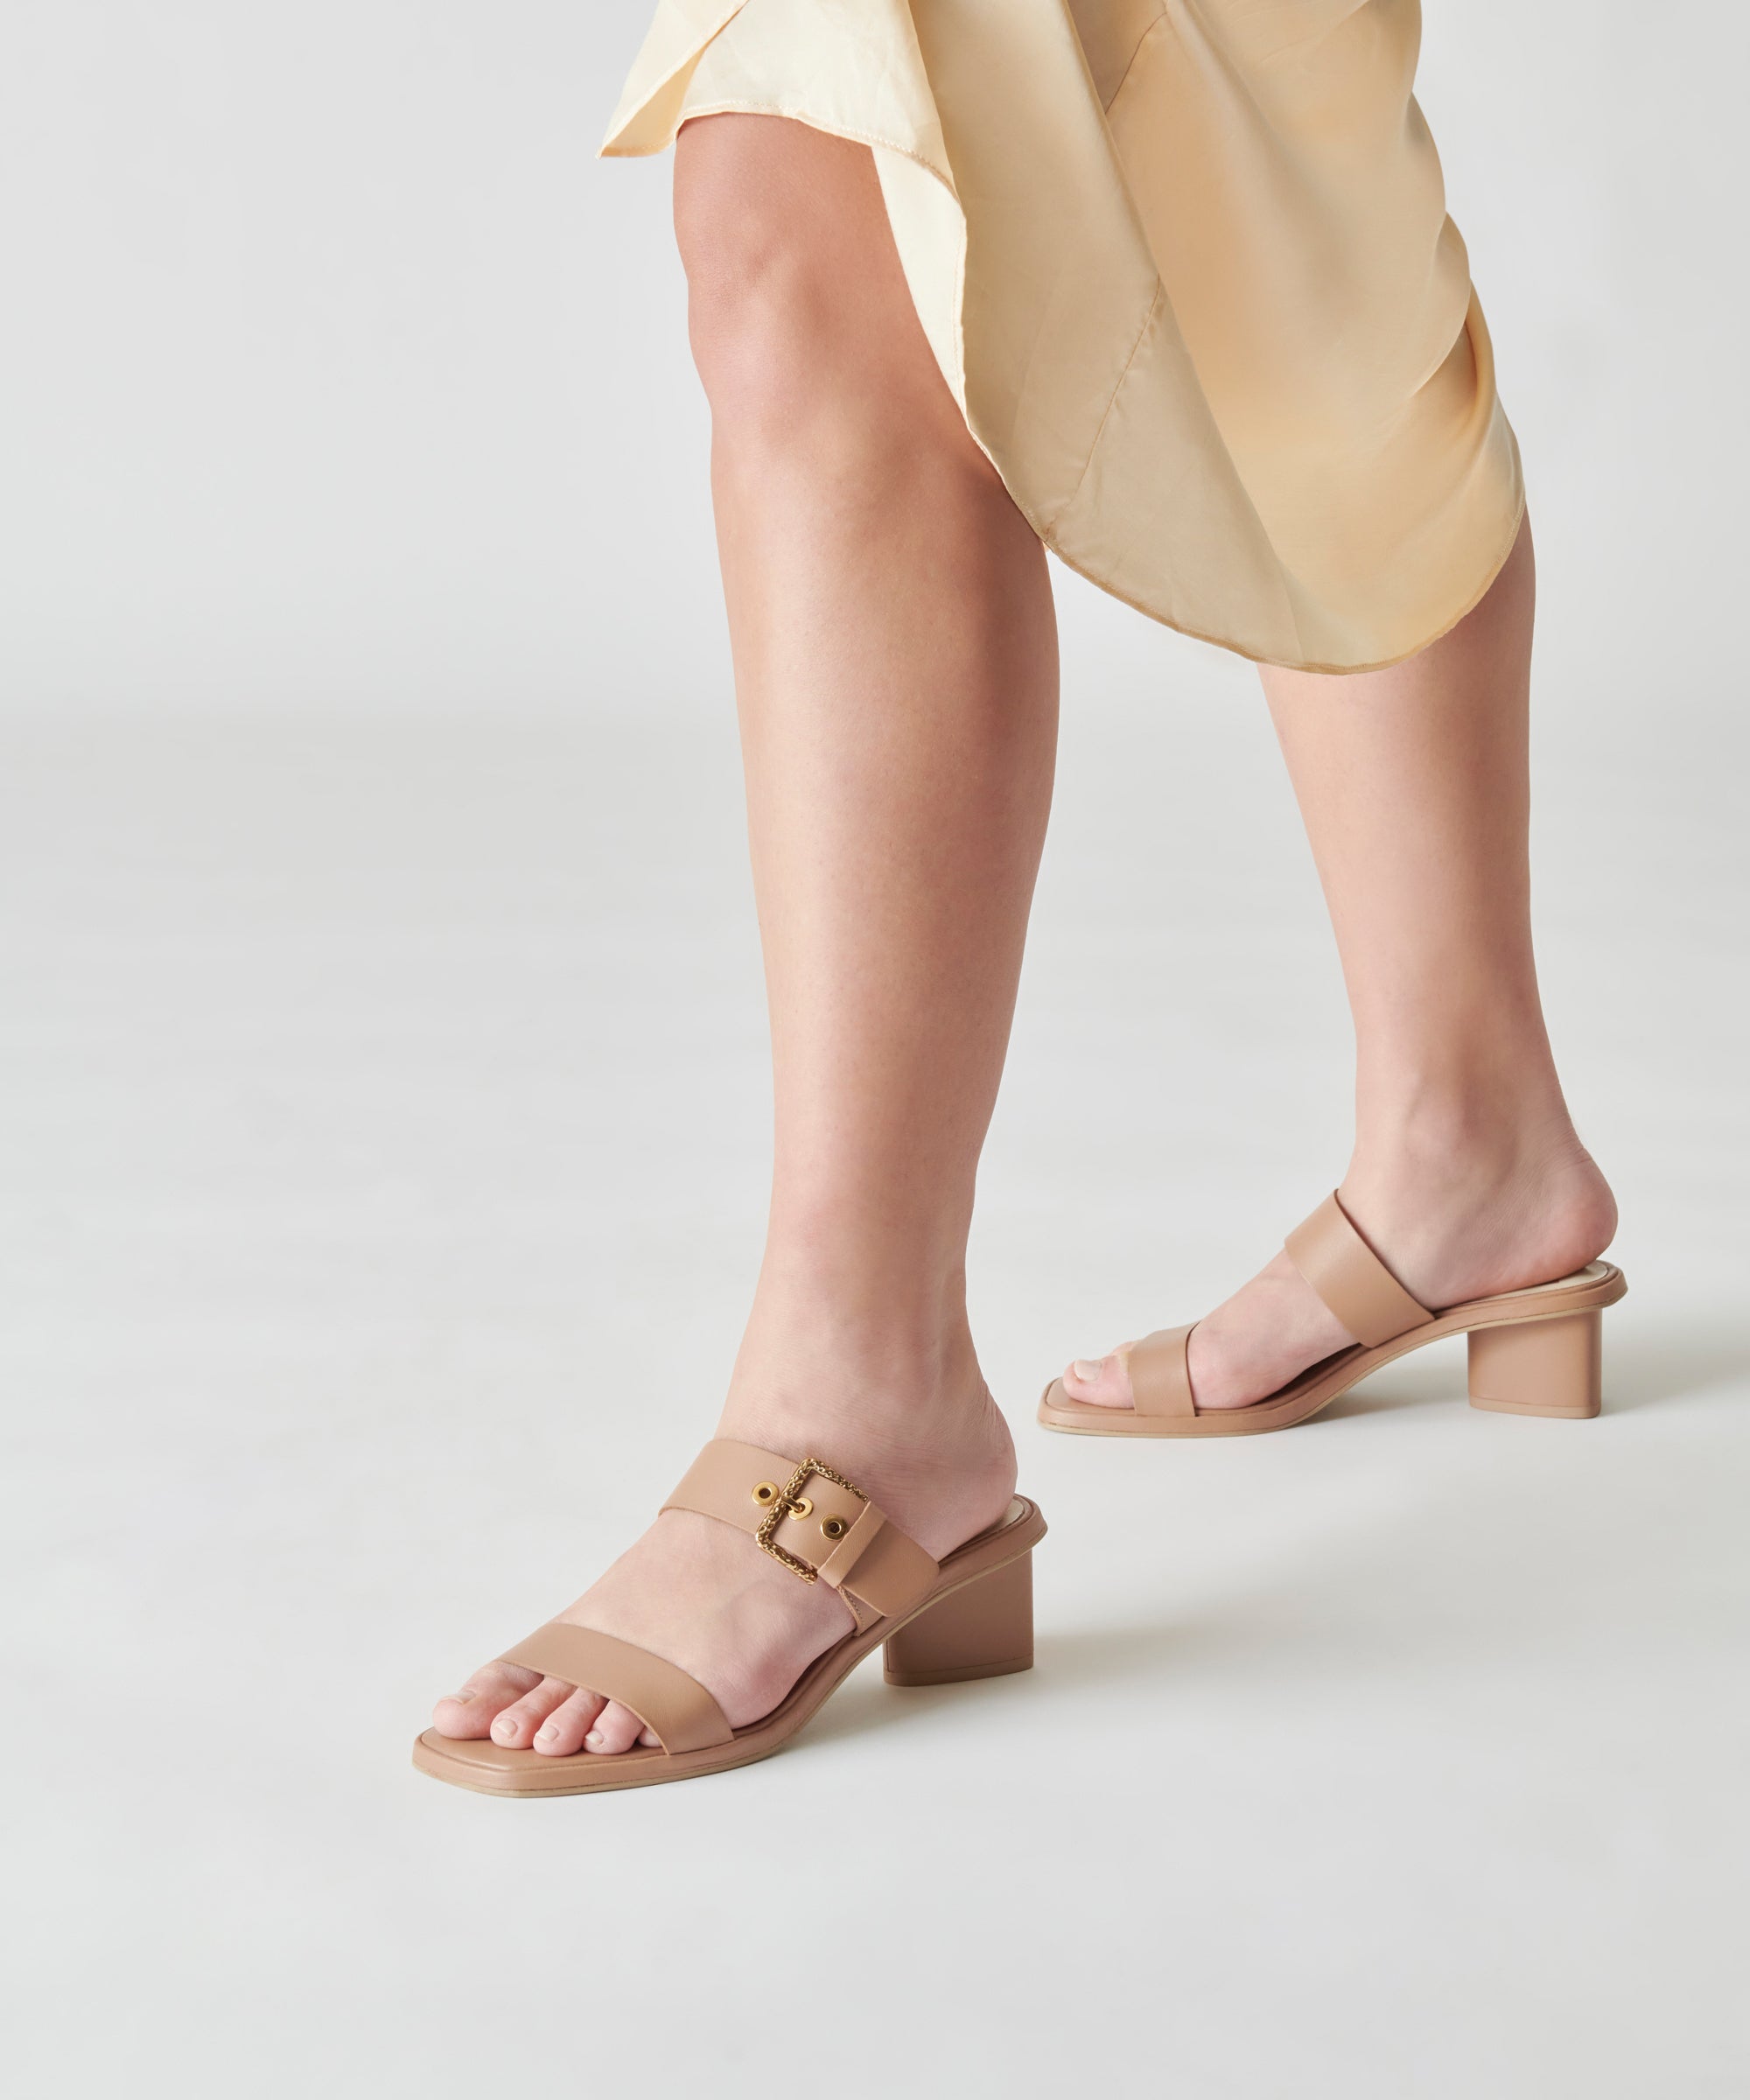 LOUIS VUITTON Ribbon Design Wood Sandals Leather Women Size 37 from Japan  CL1013